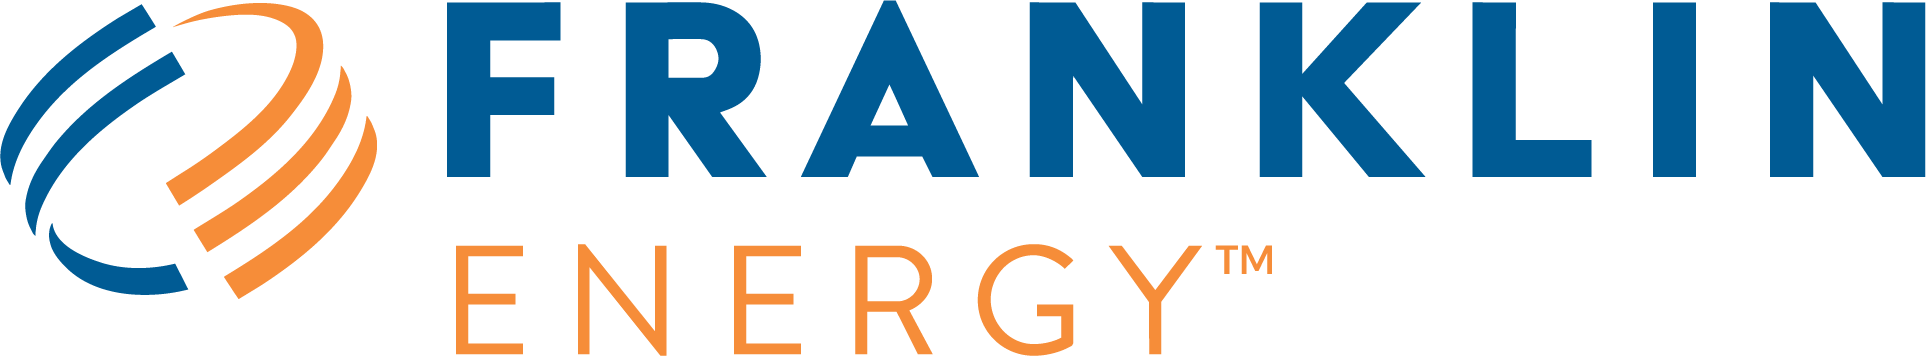 Franklin Energy Group